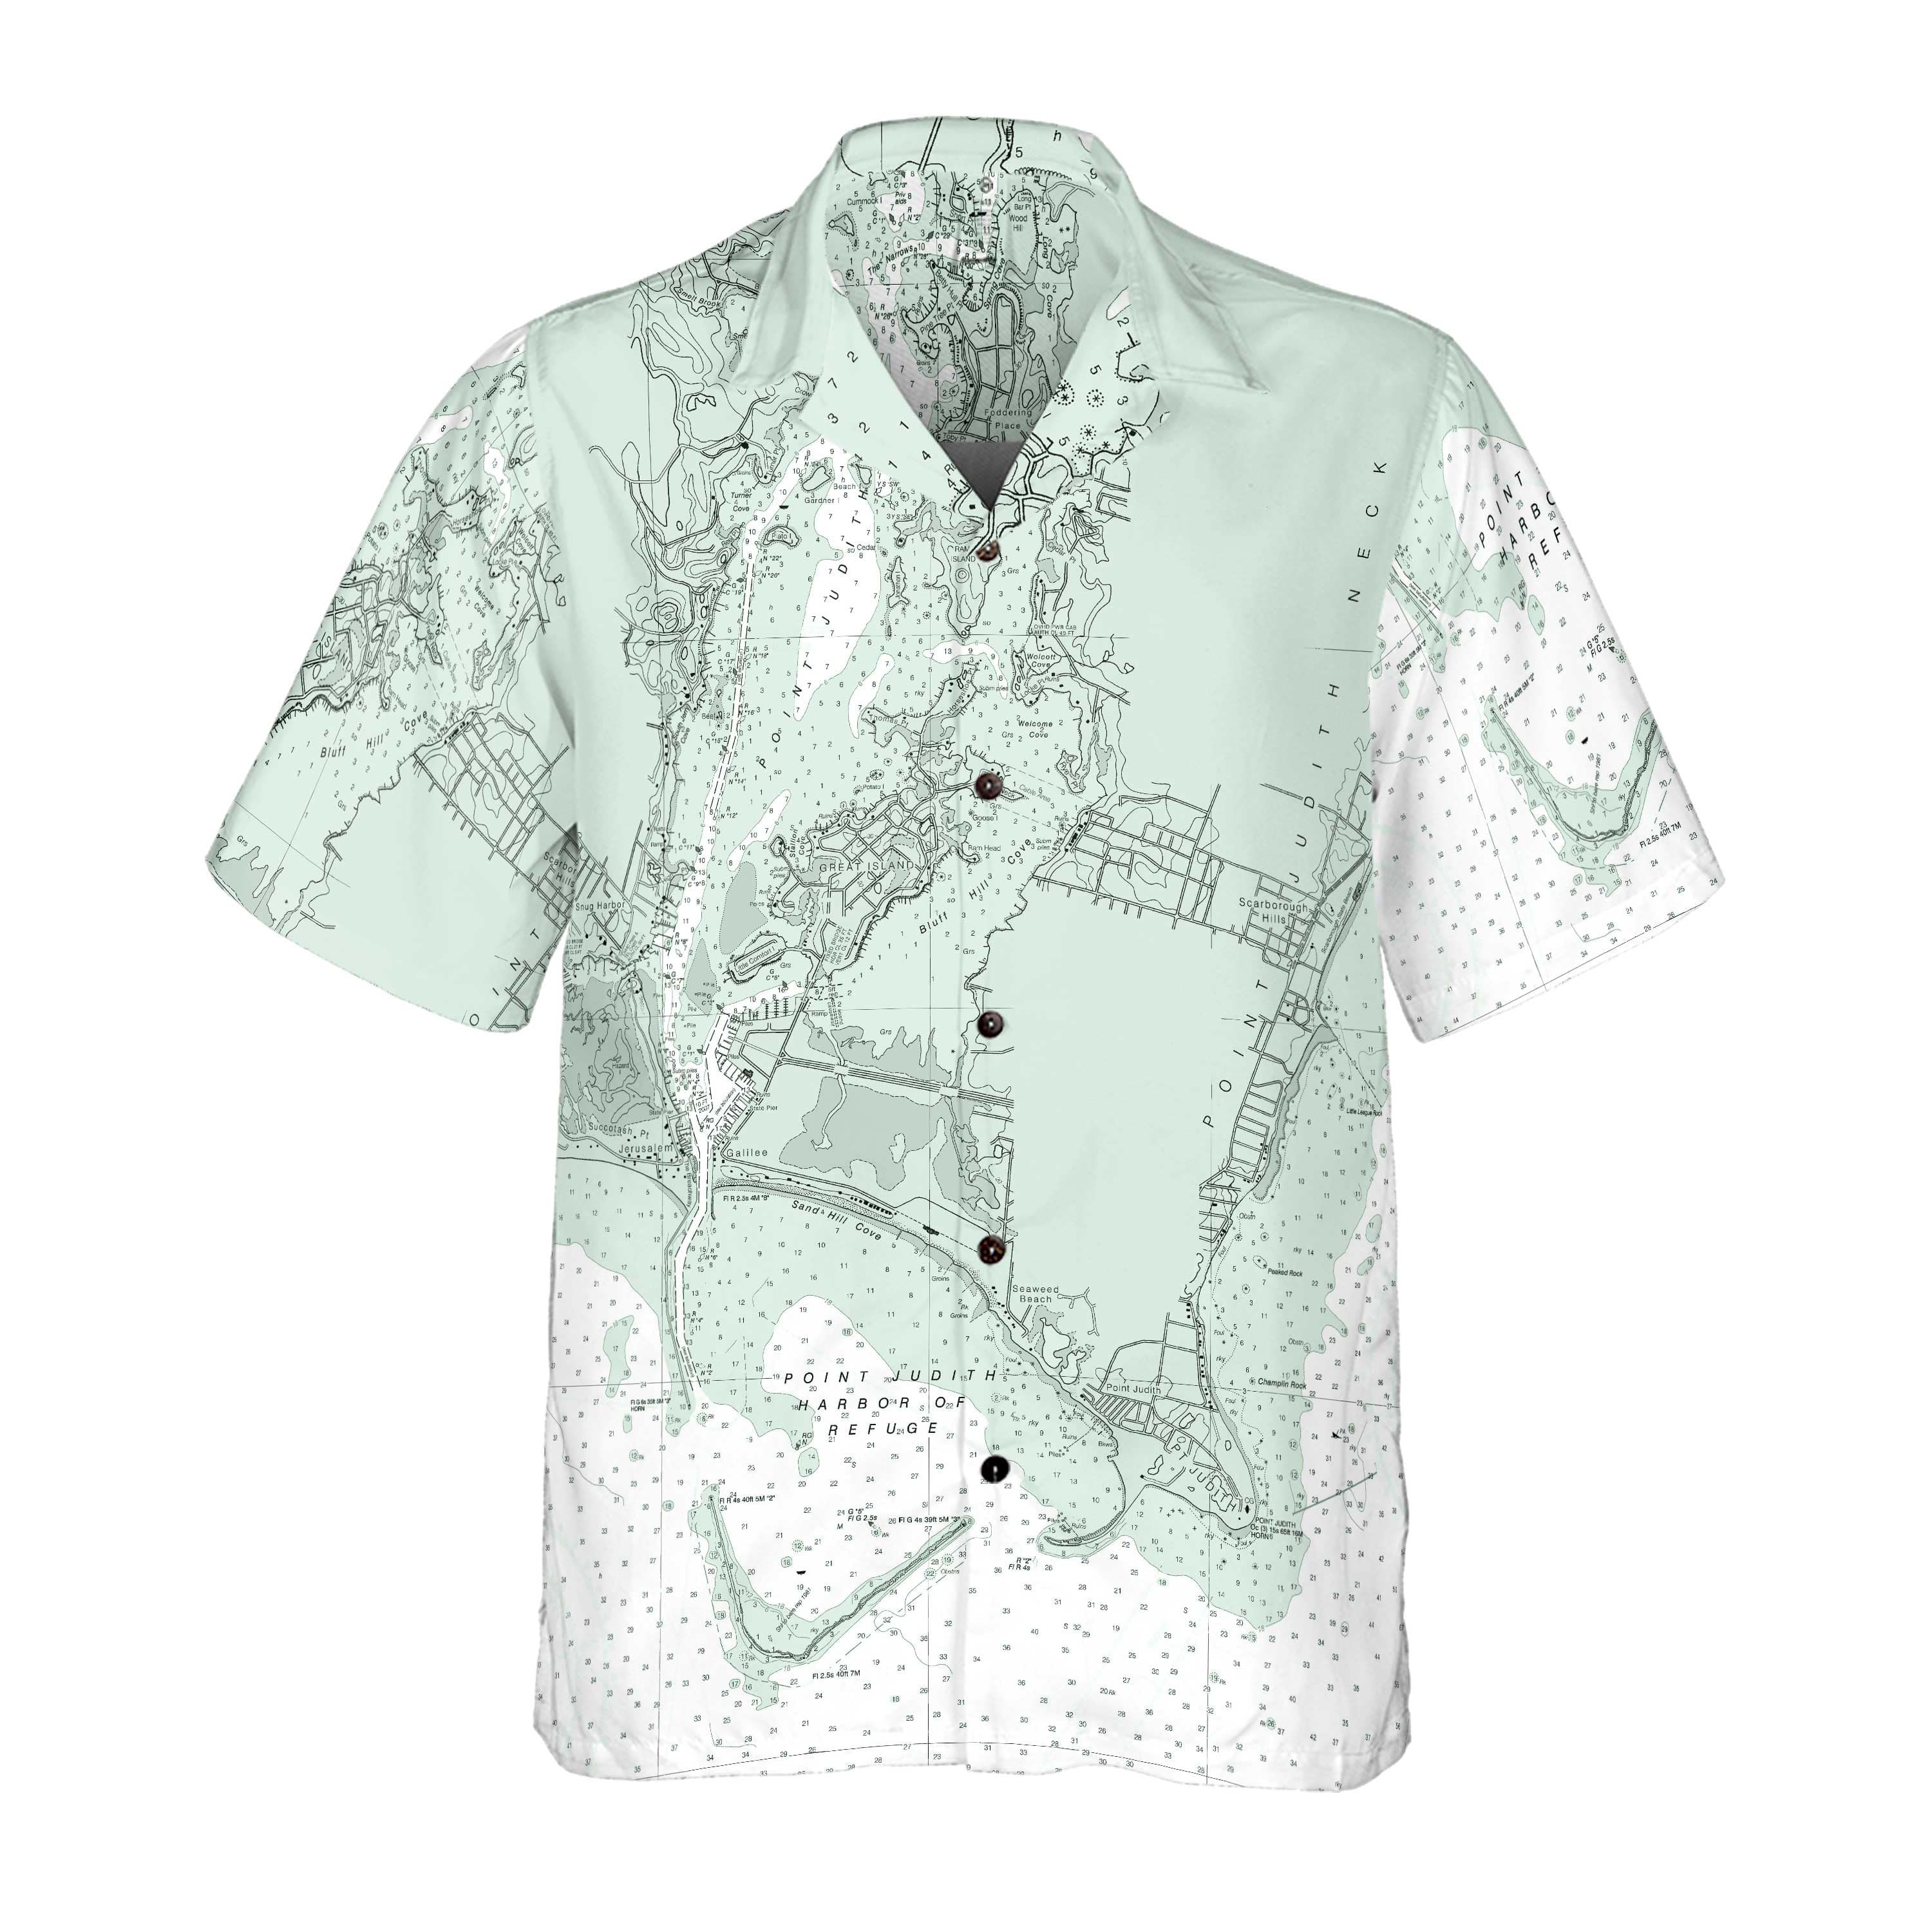 The Point Judith Seafoam Green Navigator Coconut Button Camp Shirt